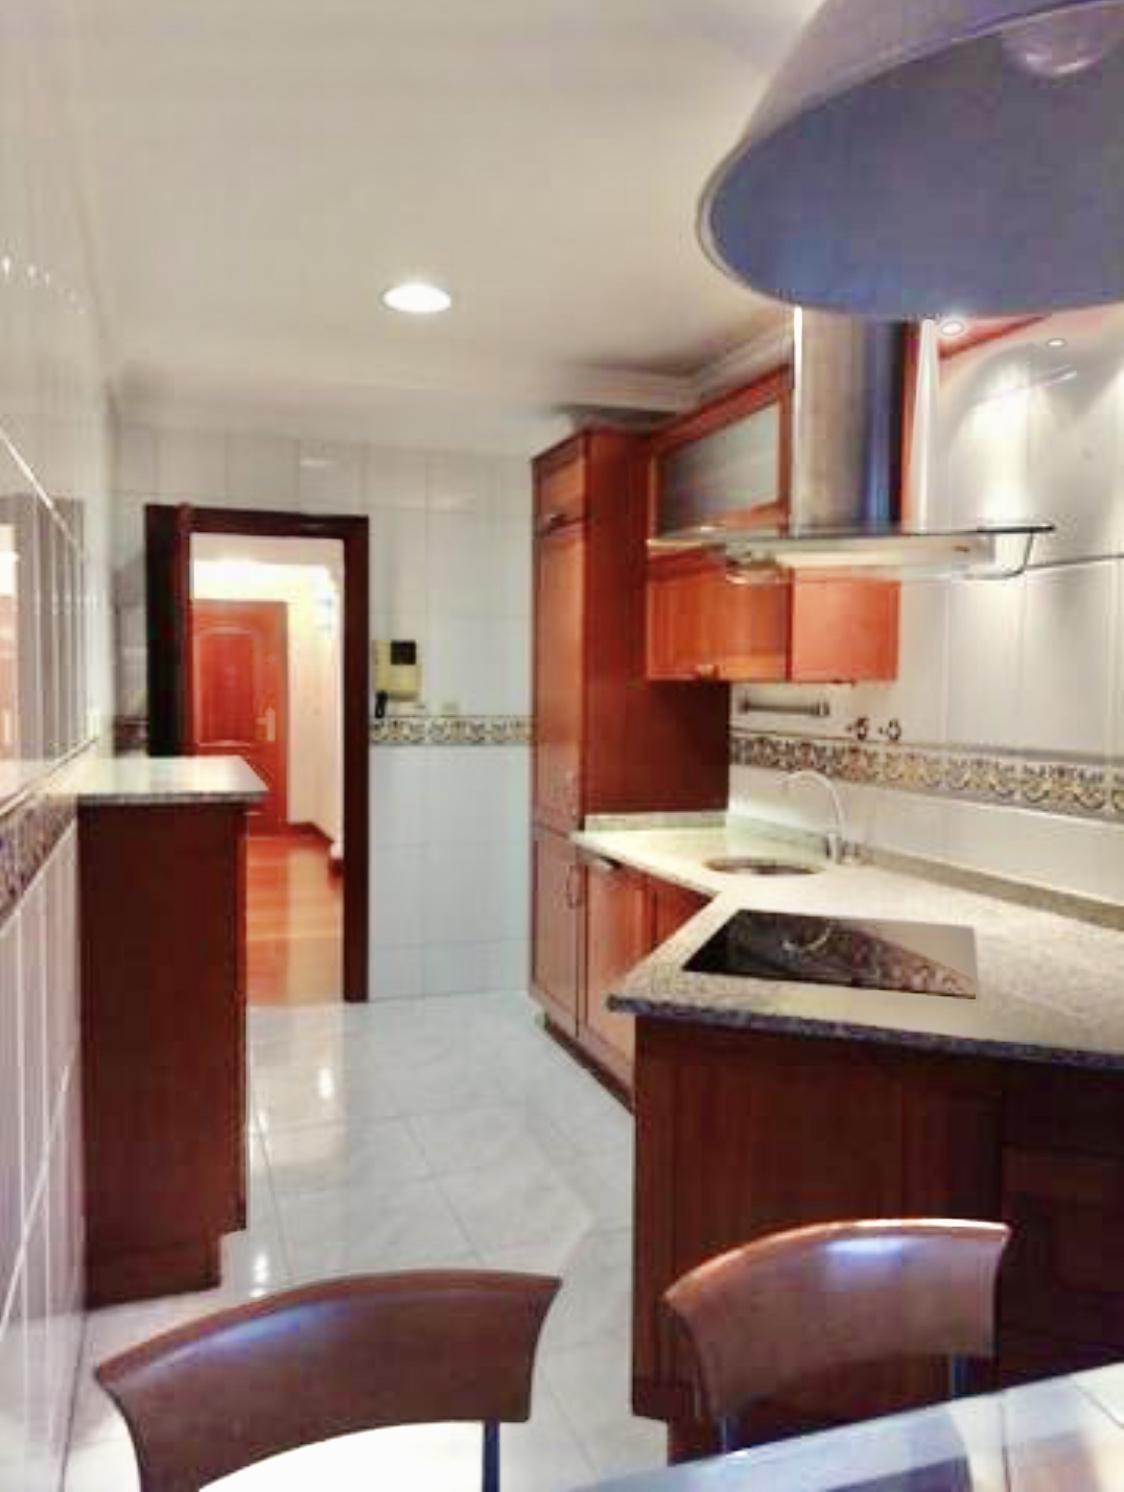 Recalde - Loft room in shared flat Bilbao